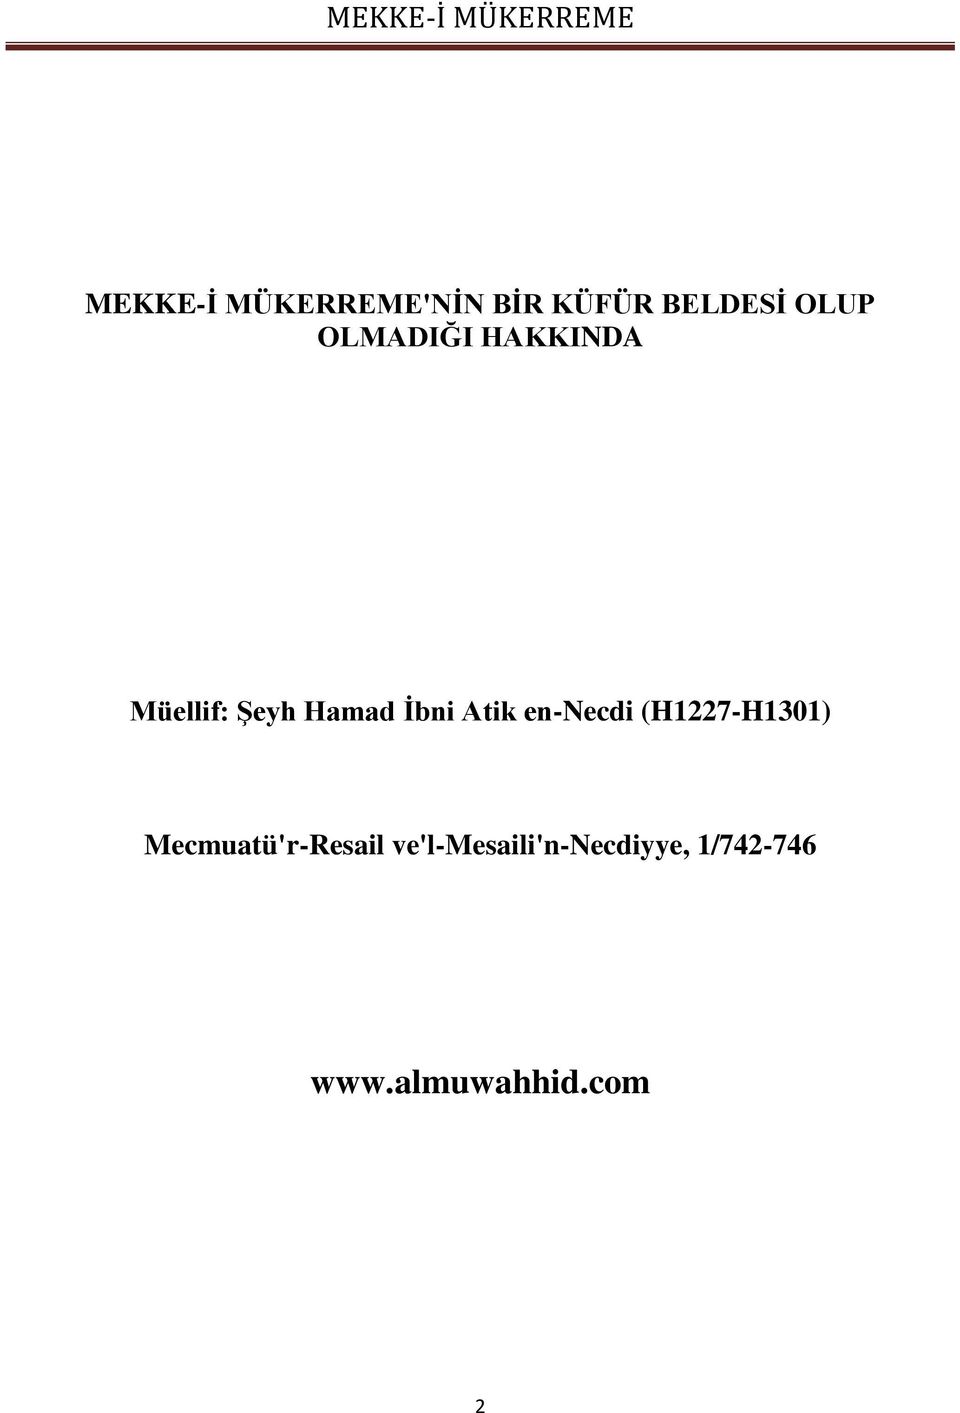 en-necdi (H1227-H1301) Mecmuatü'r-Resail